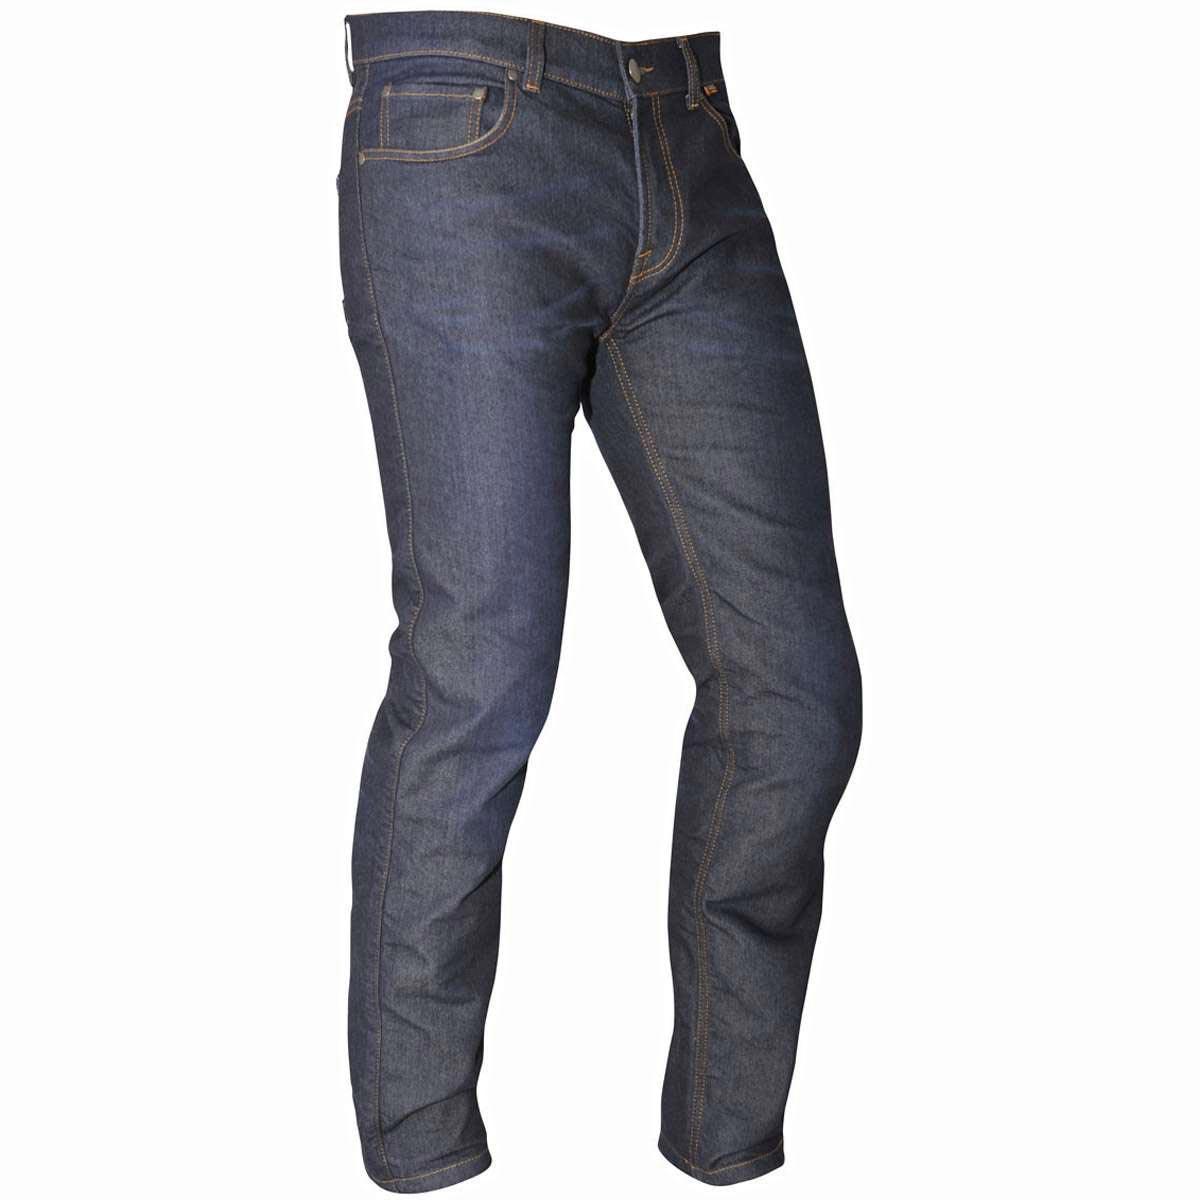 Richa Original Slim Cut Jeans Washed Blue 32in Leg 44in Waist